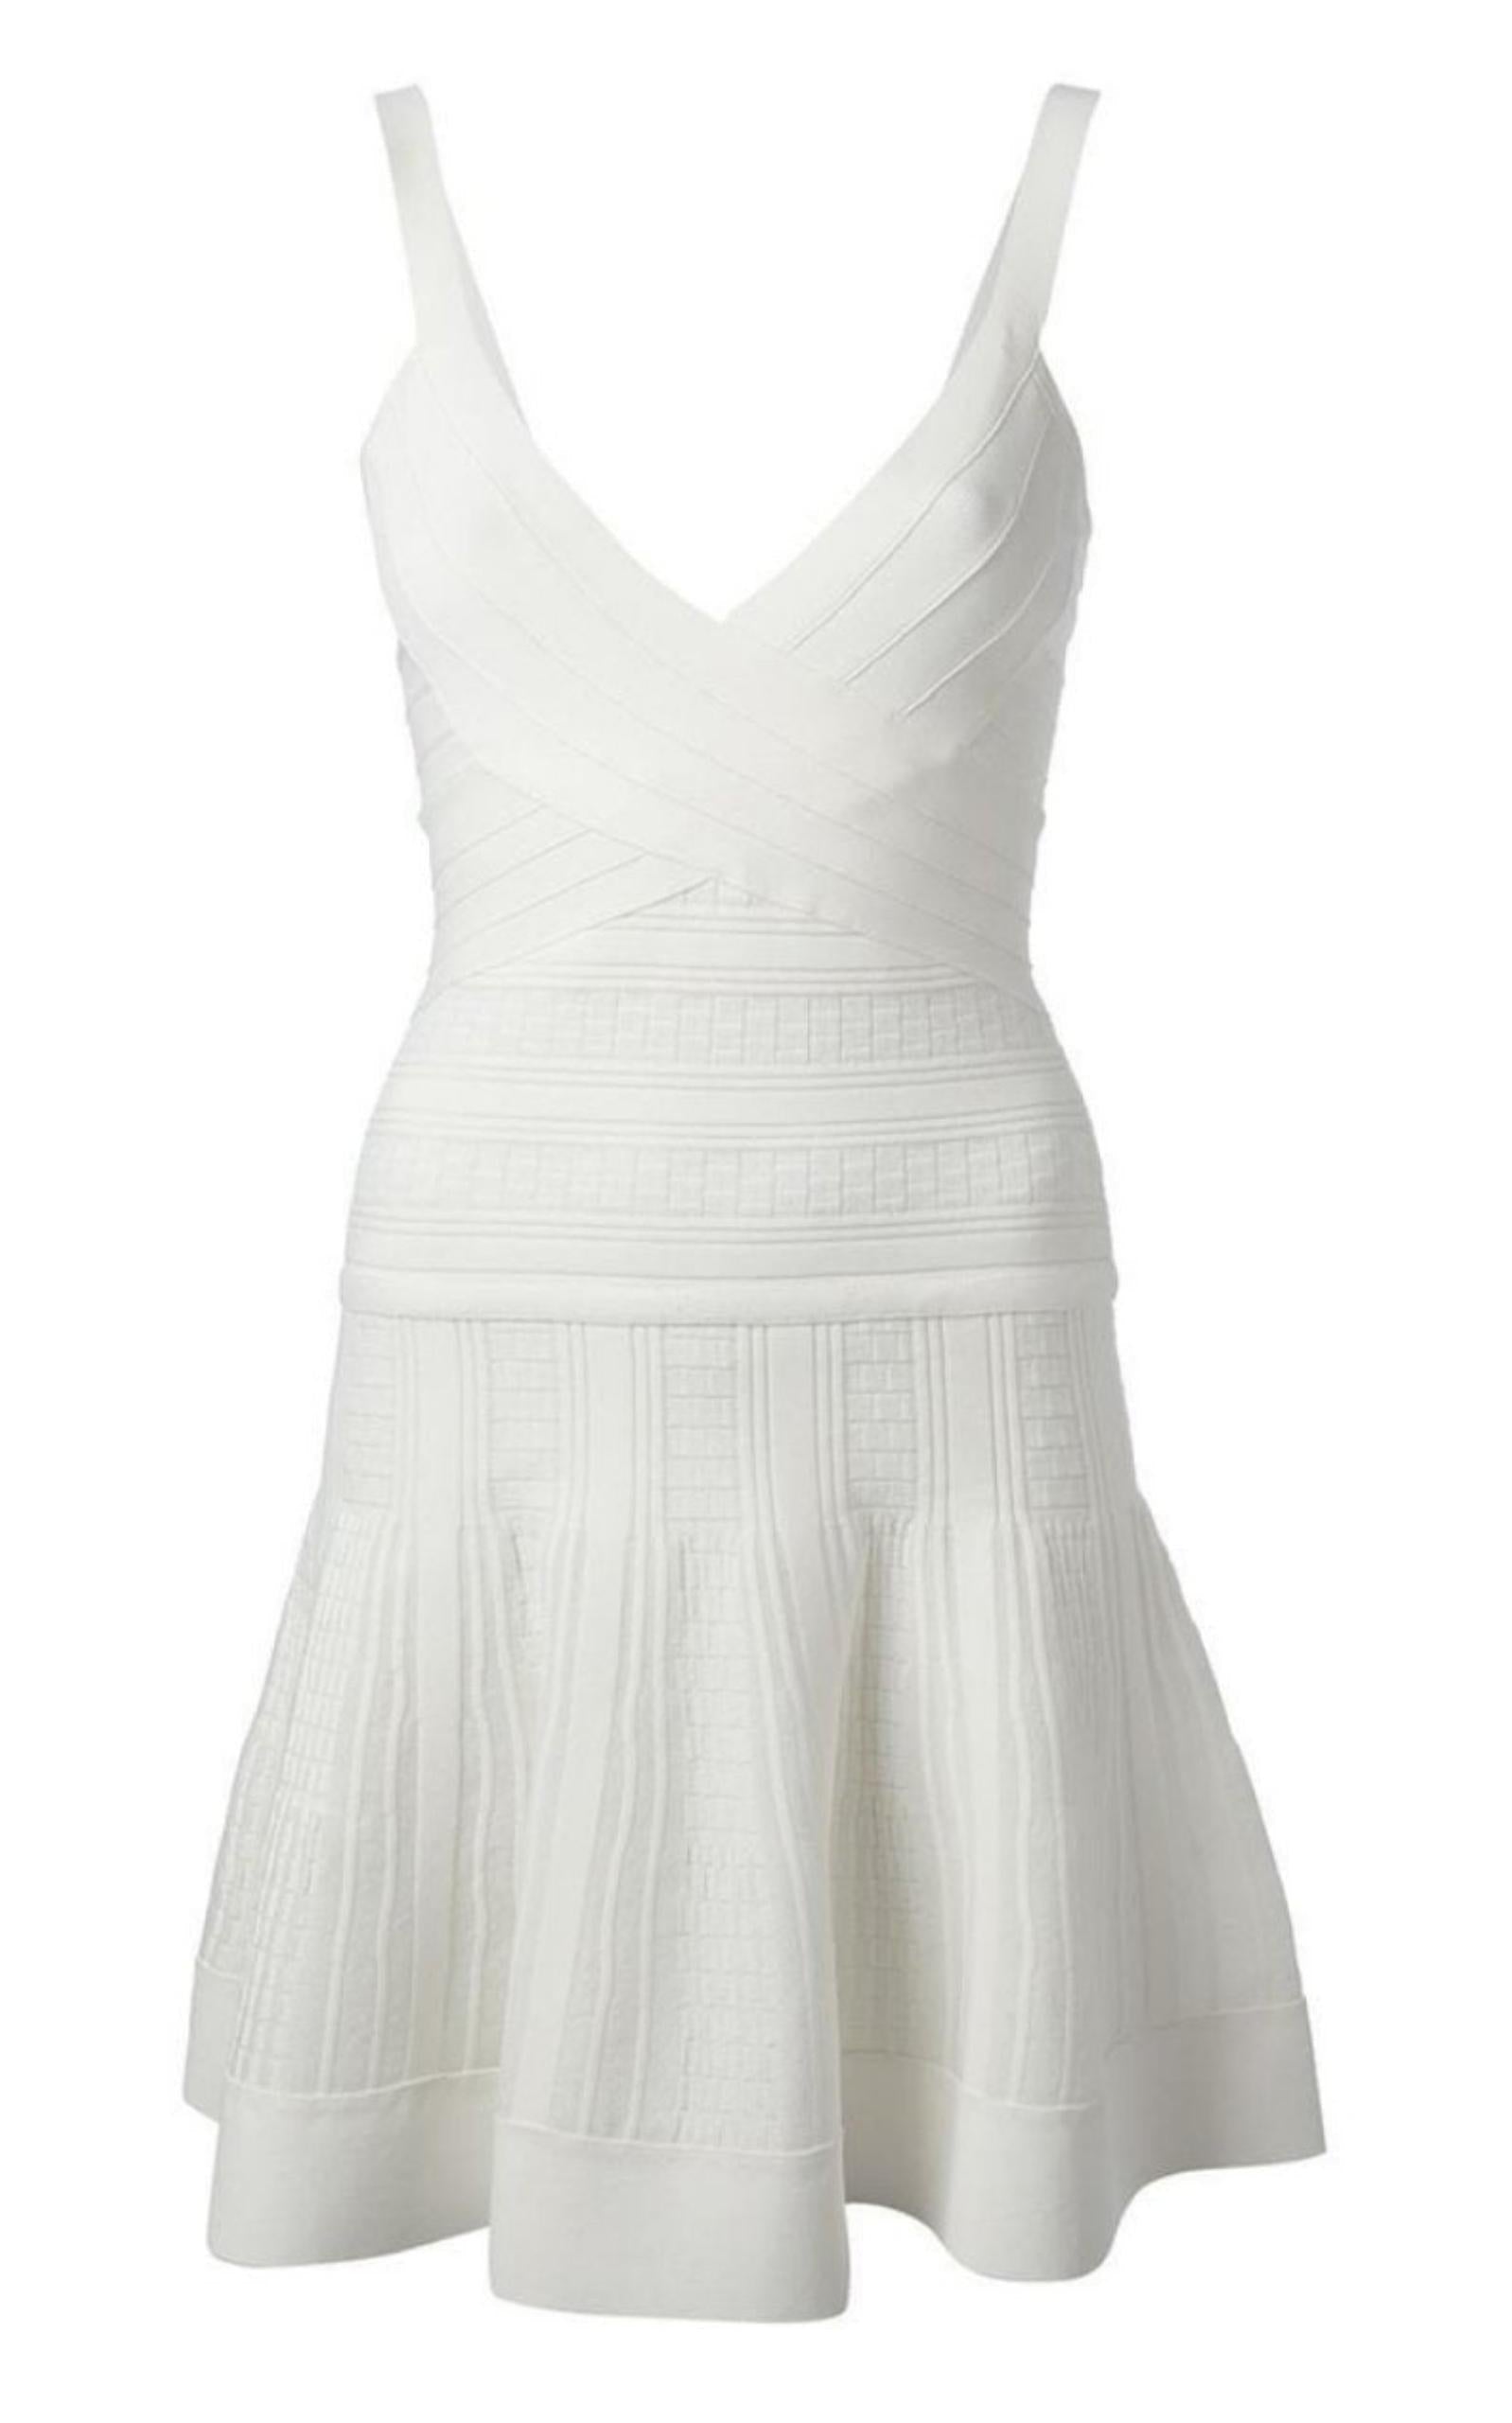  Herve LegerThana Textured Jacquard Yarn White Dress - Runway Catalog